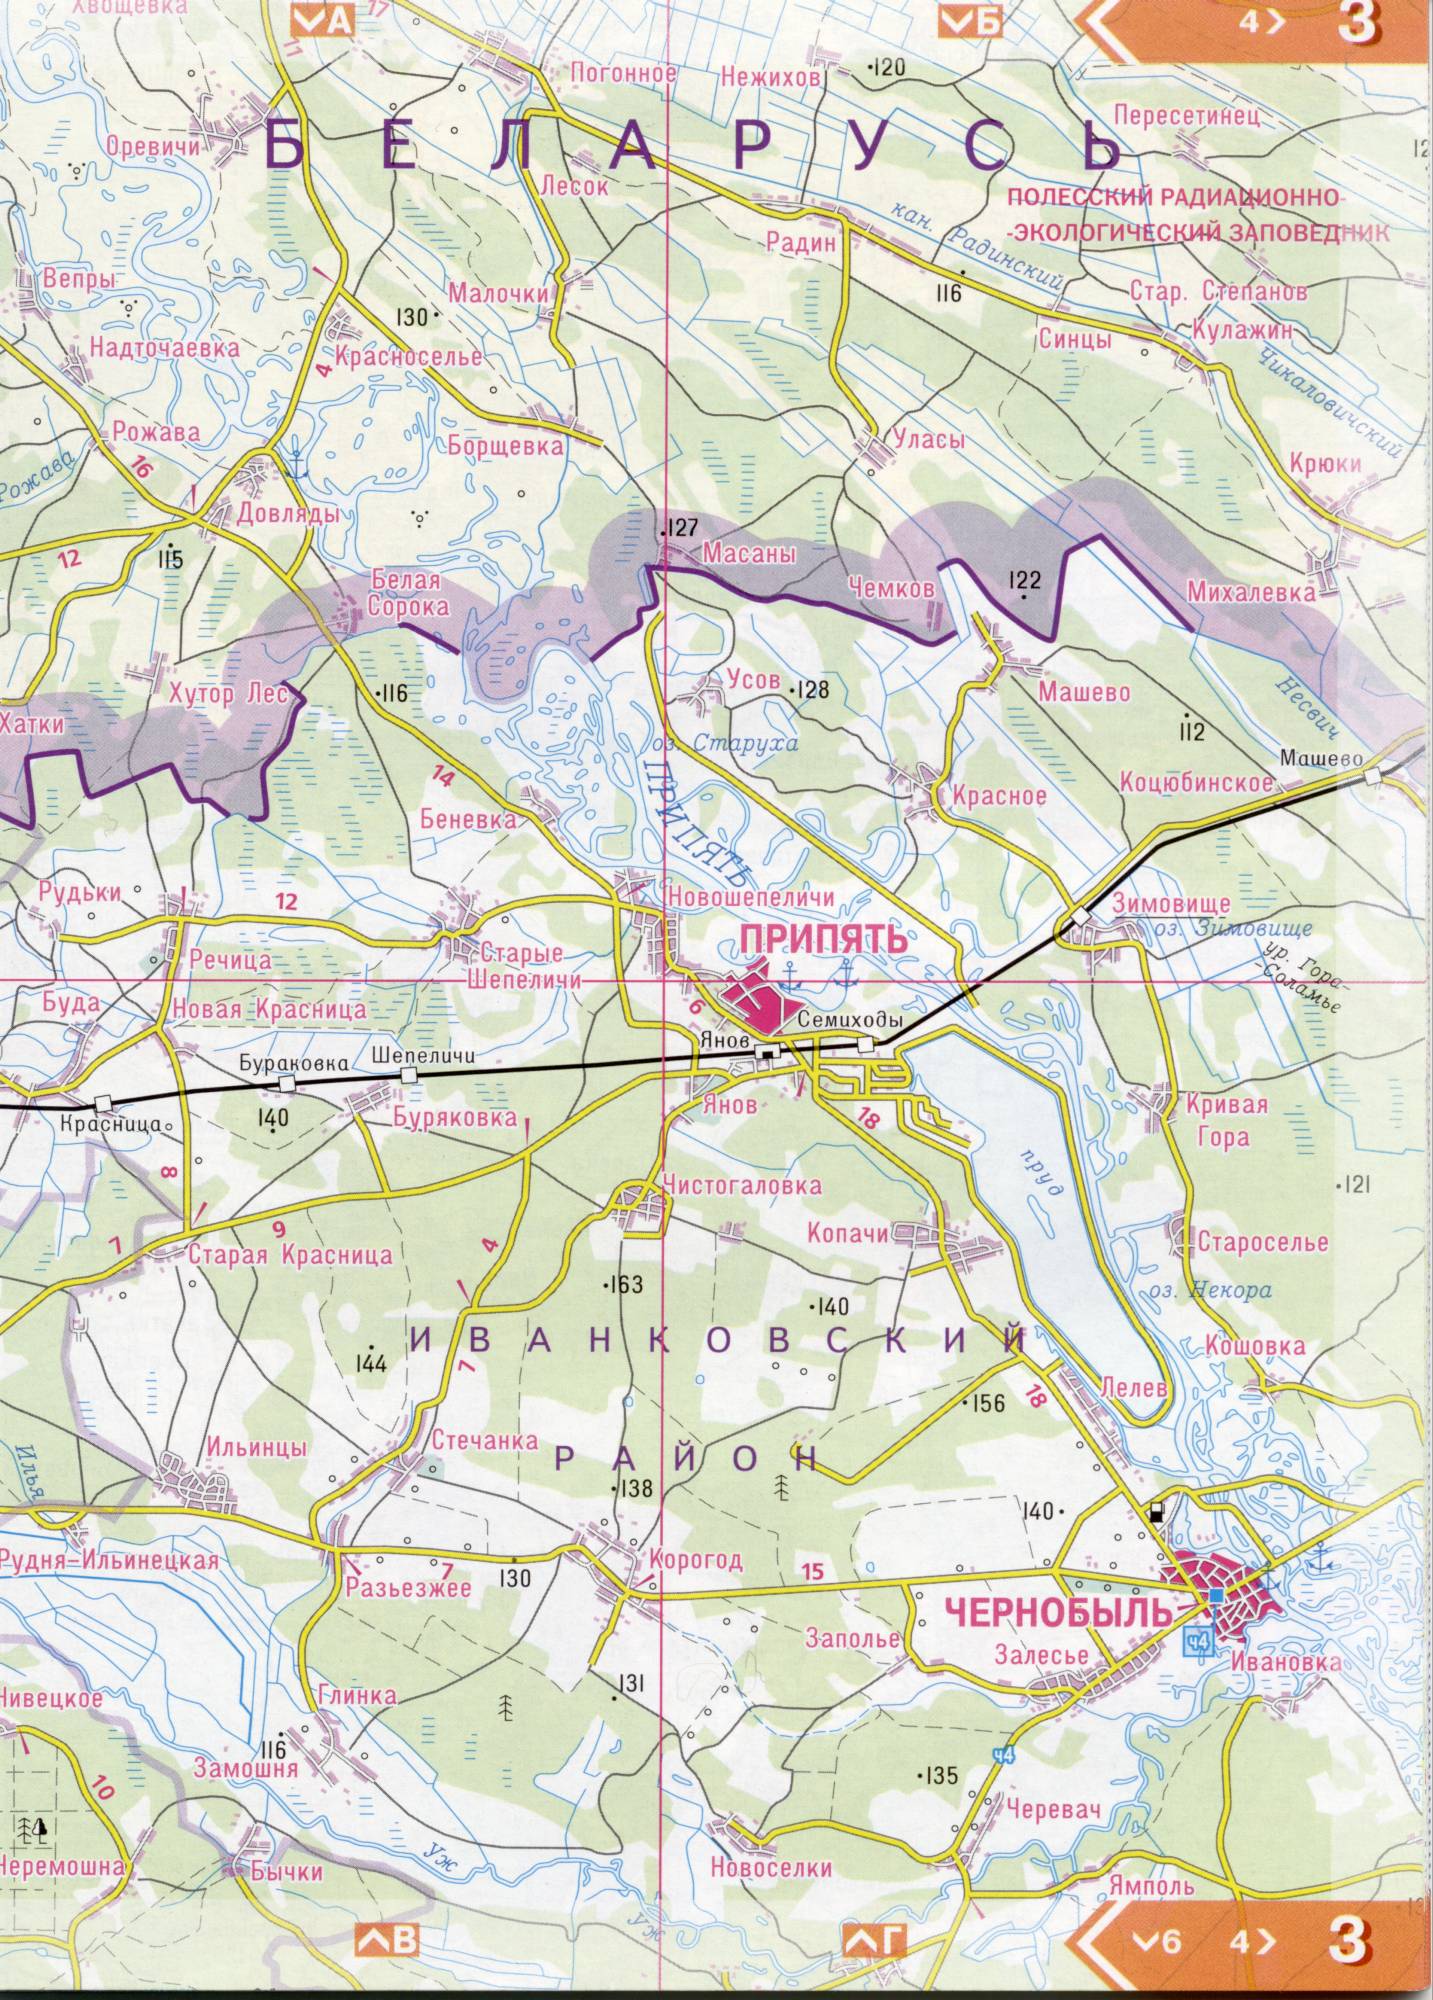 Atlas of the Kiev region. Detailed map of the Kiev region from the road atlas. Kiev region on a detailed map of scale 1cm = 3km. Free Download, B0 - Ulasi, Malochki